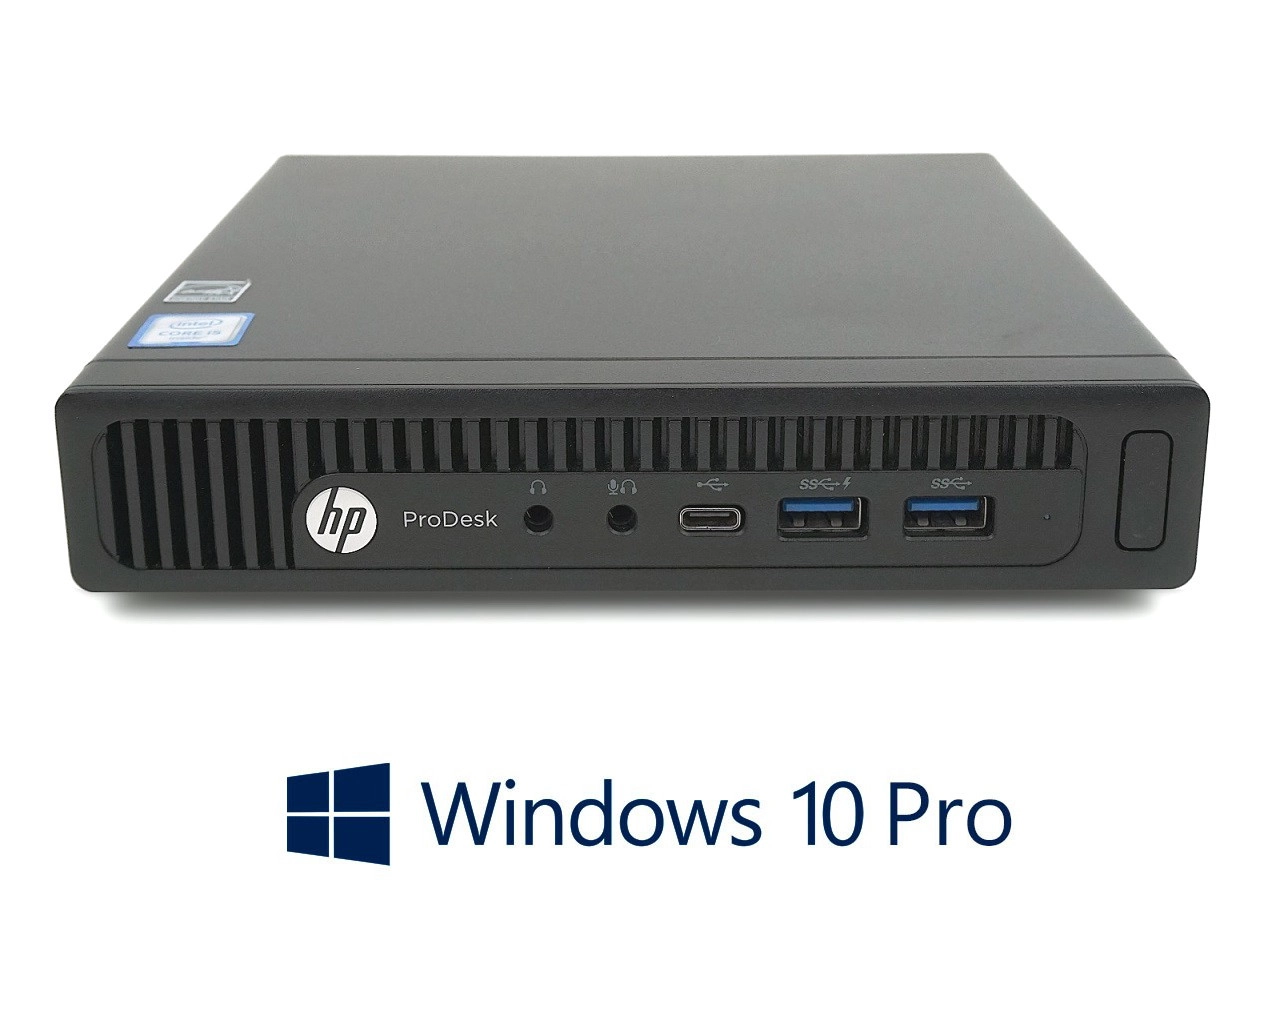 HP ProDesk 600 G2 Desktop Mini PC